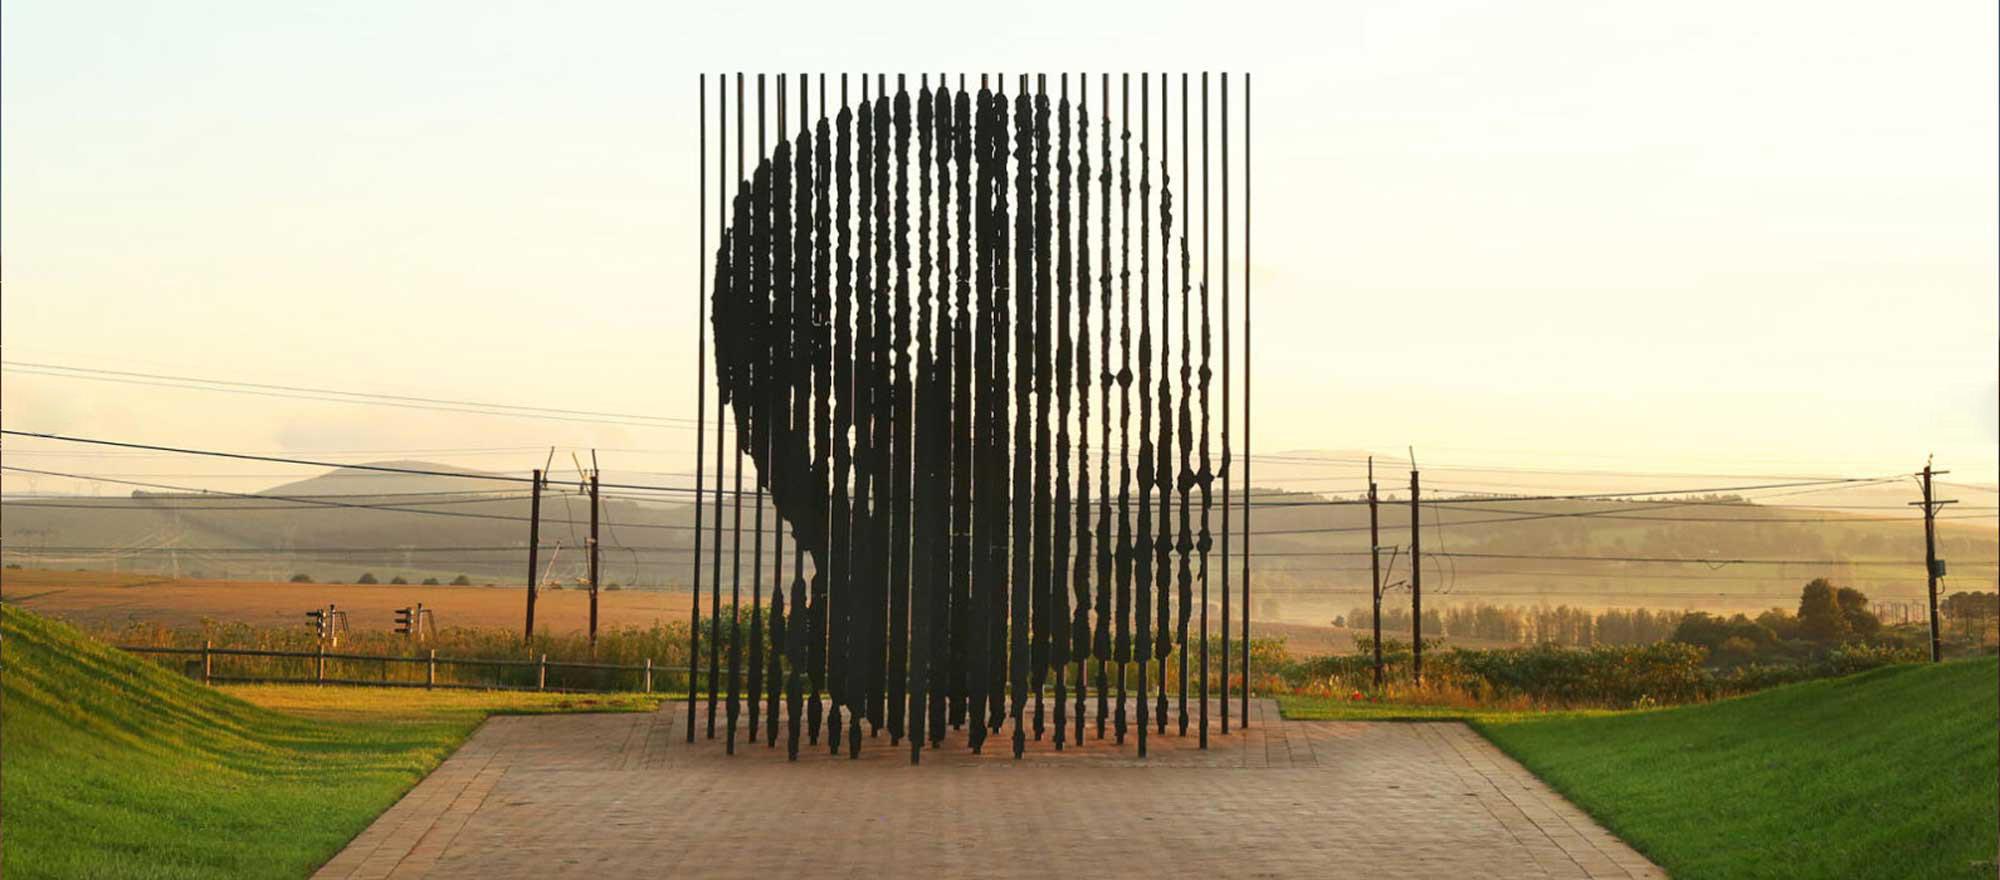 Nelson Mandela sculpture